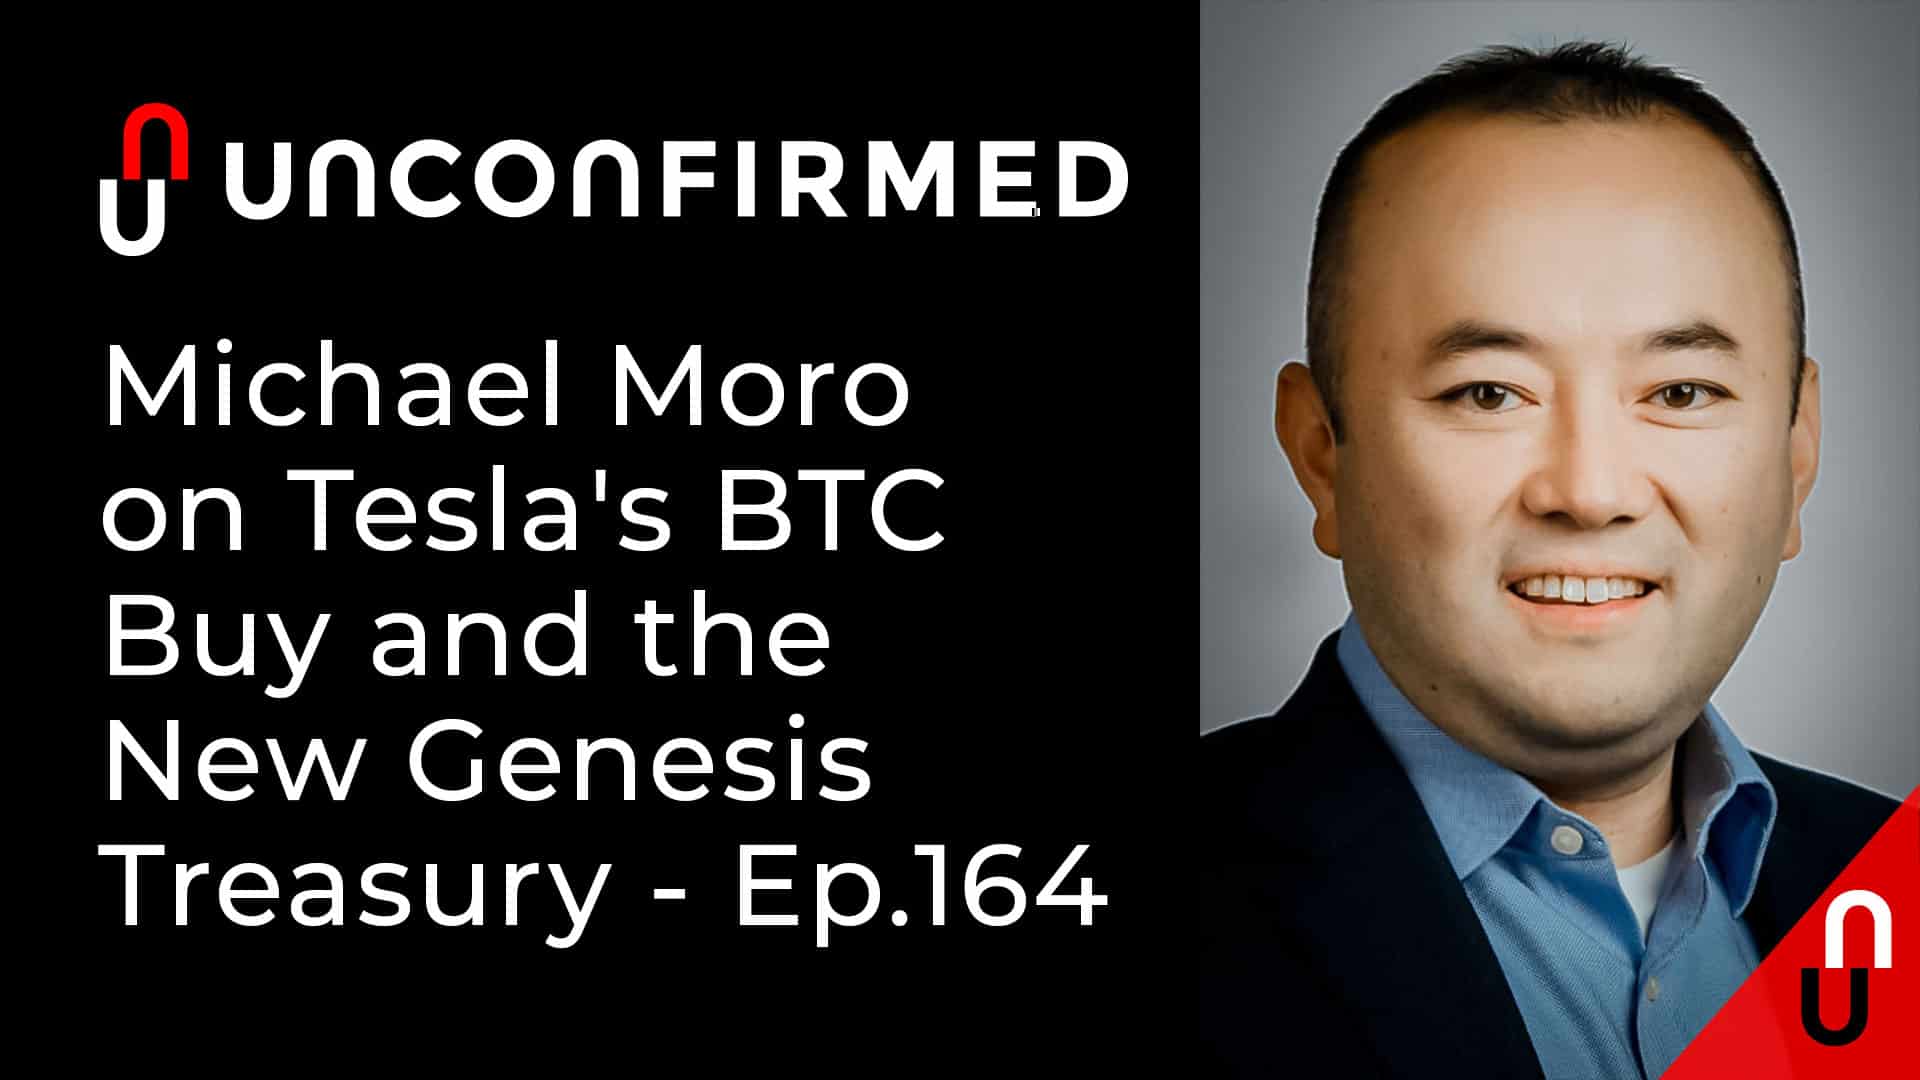 Unconfirmed - Ep.164 - Michael Moro on Tesla's BTC Buy and the New Genesis Treasury